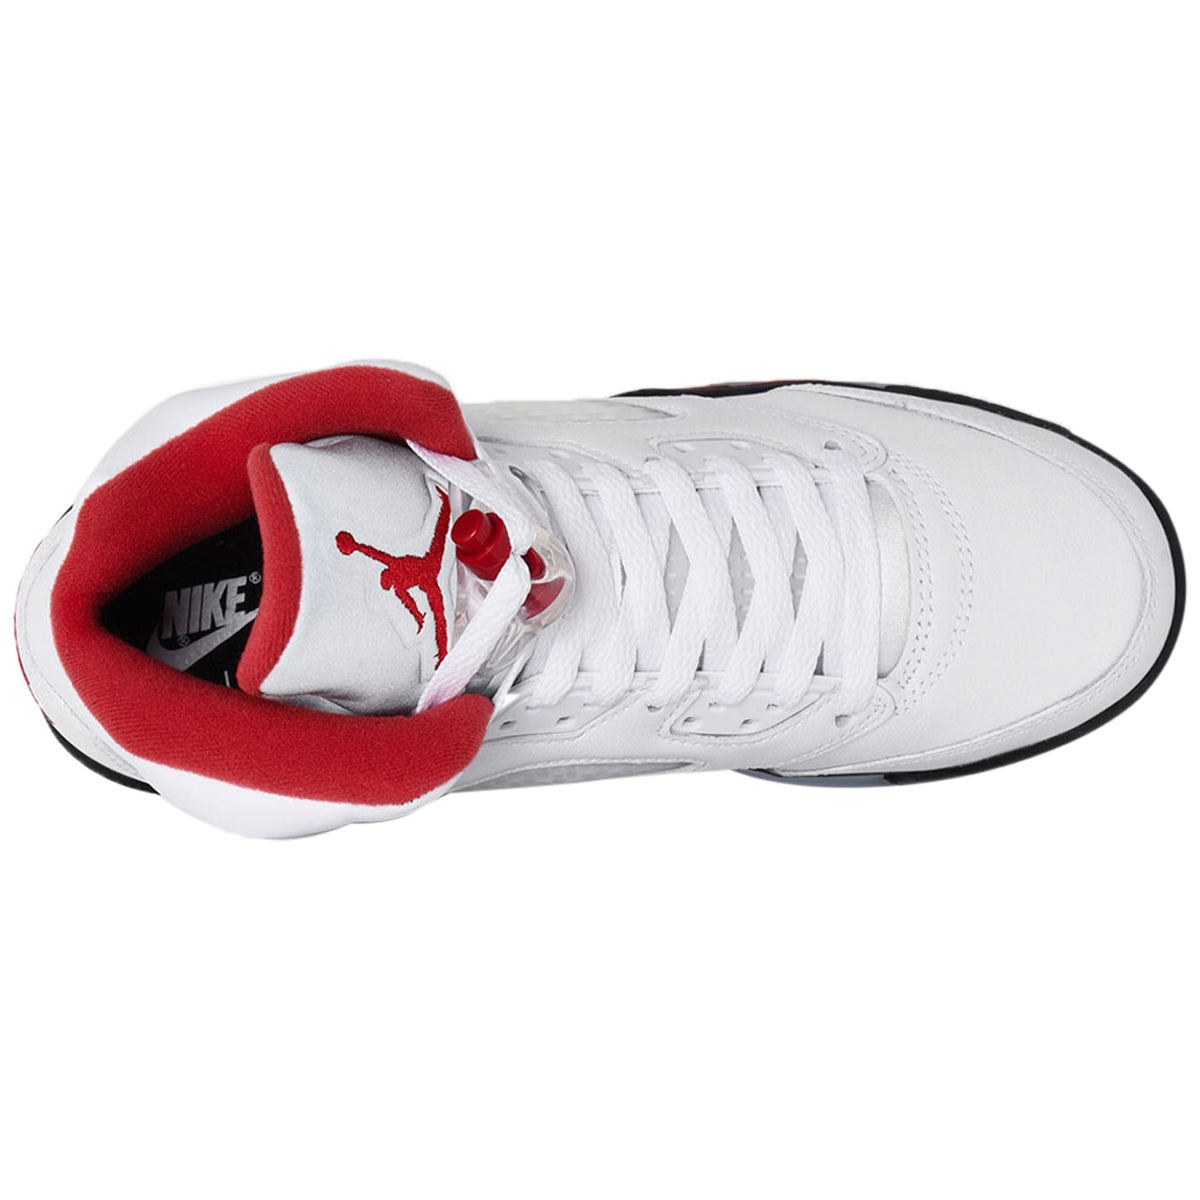 Jordan 5 Retro Fire Red Silver Tongue (2020) (GS)